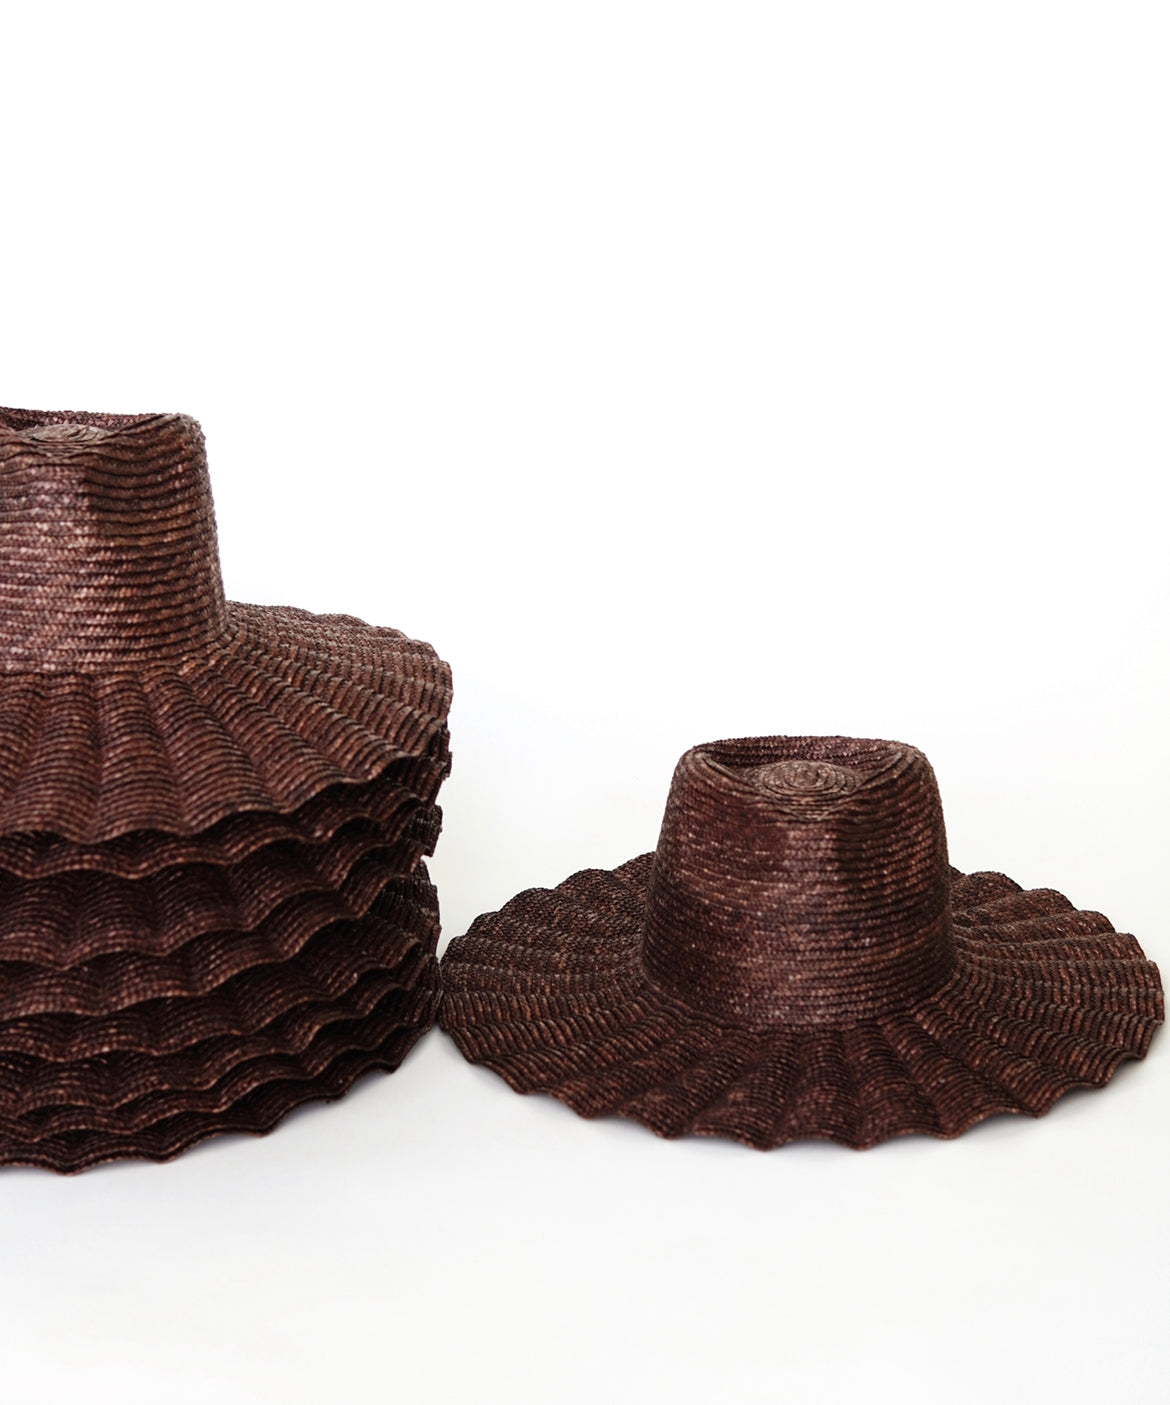 Nalu Brown - Wide brim straw hat